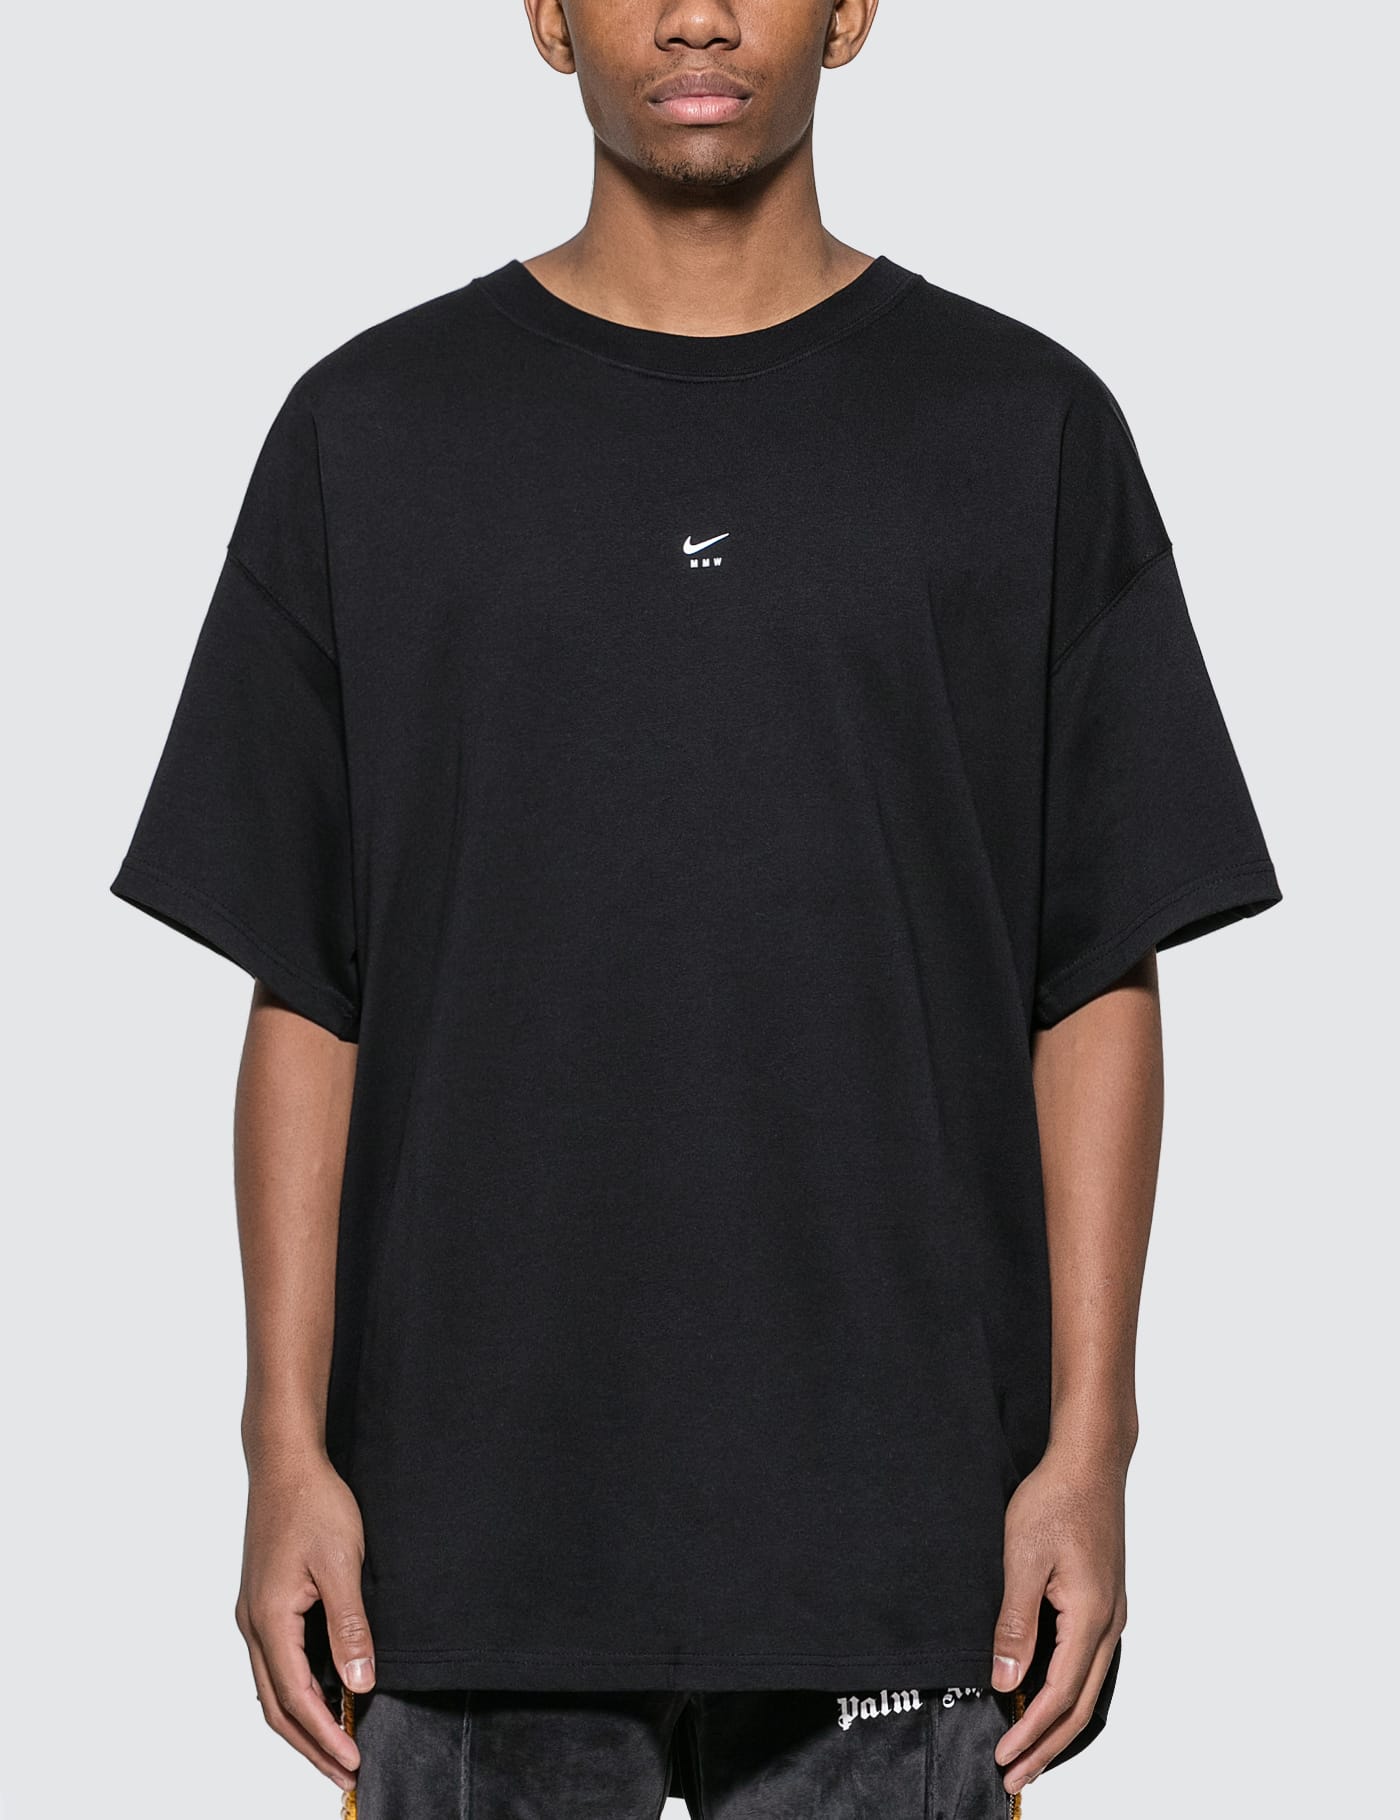 Nike - Nike x MMW SE T-shirt | HBX